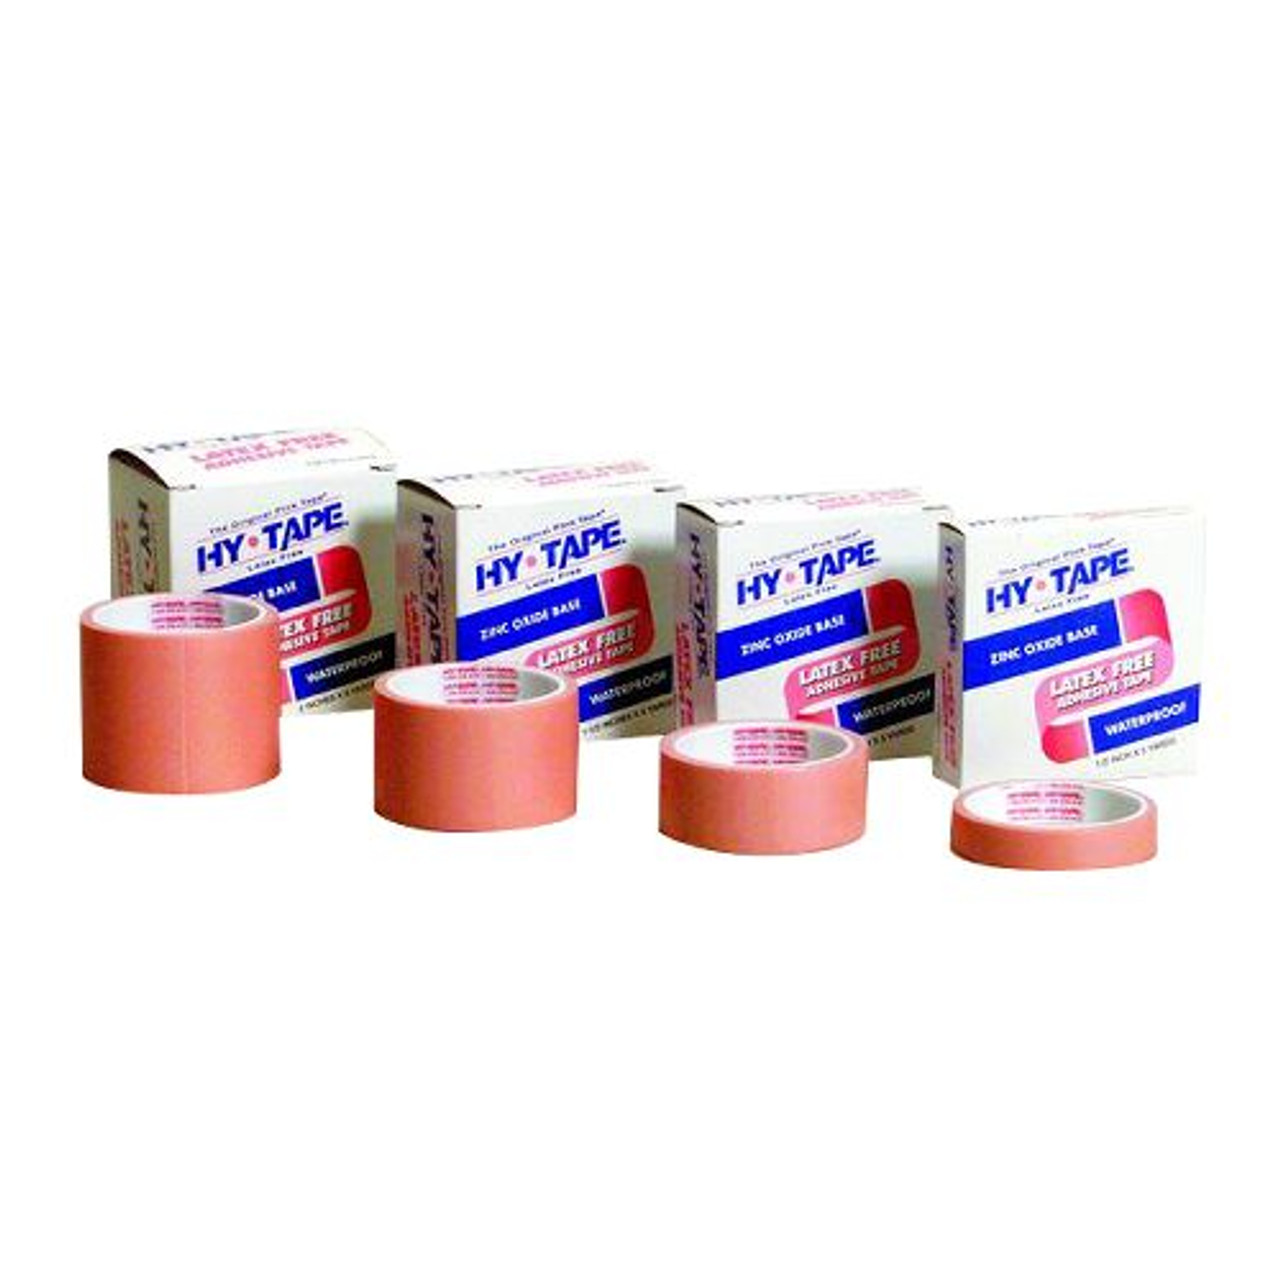 Hy-Tape - The Original Pink Tape - Zinc Infused Waterproof Medical Tape